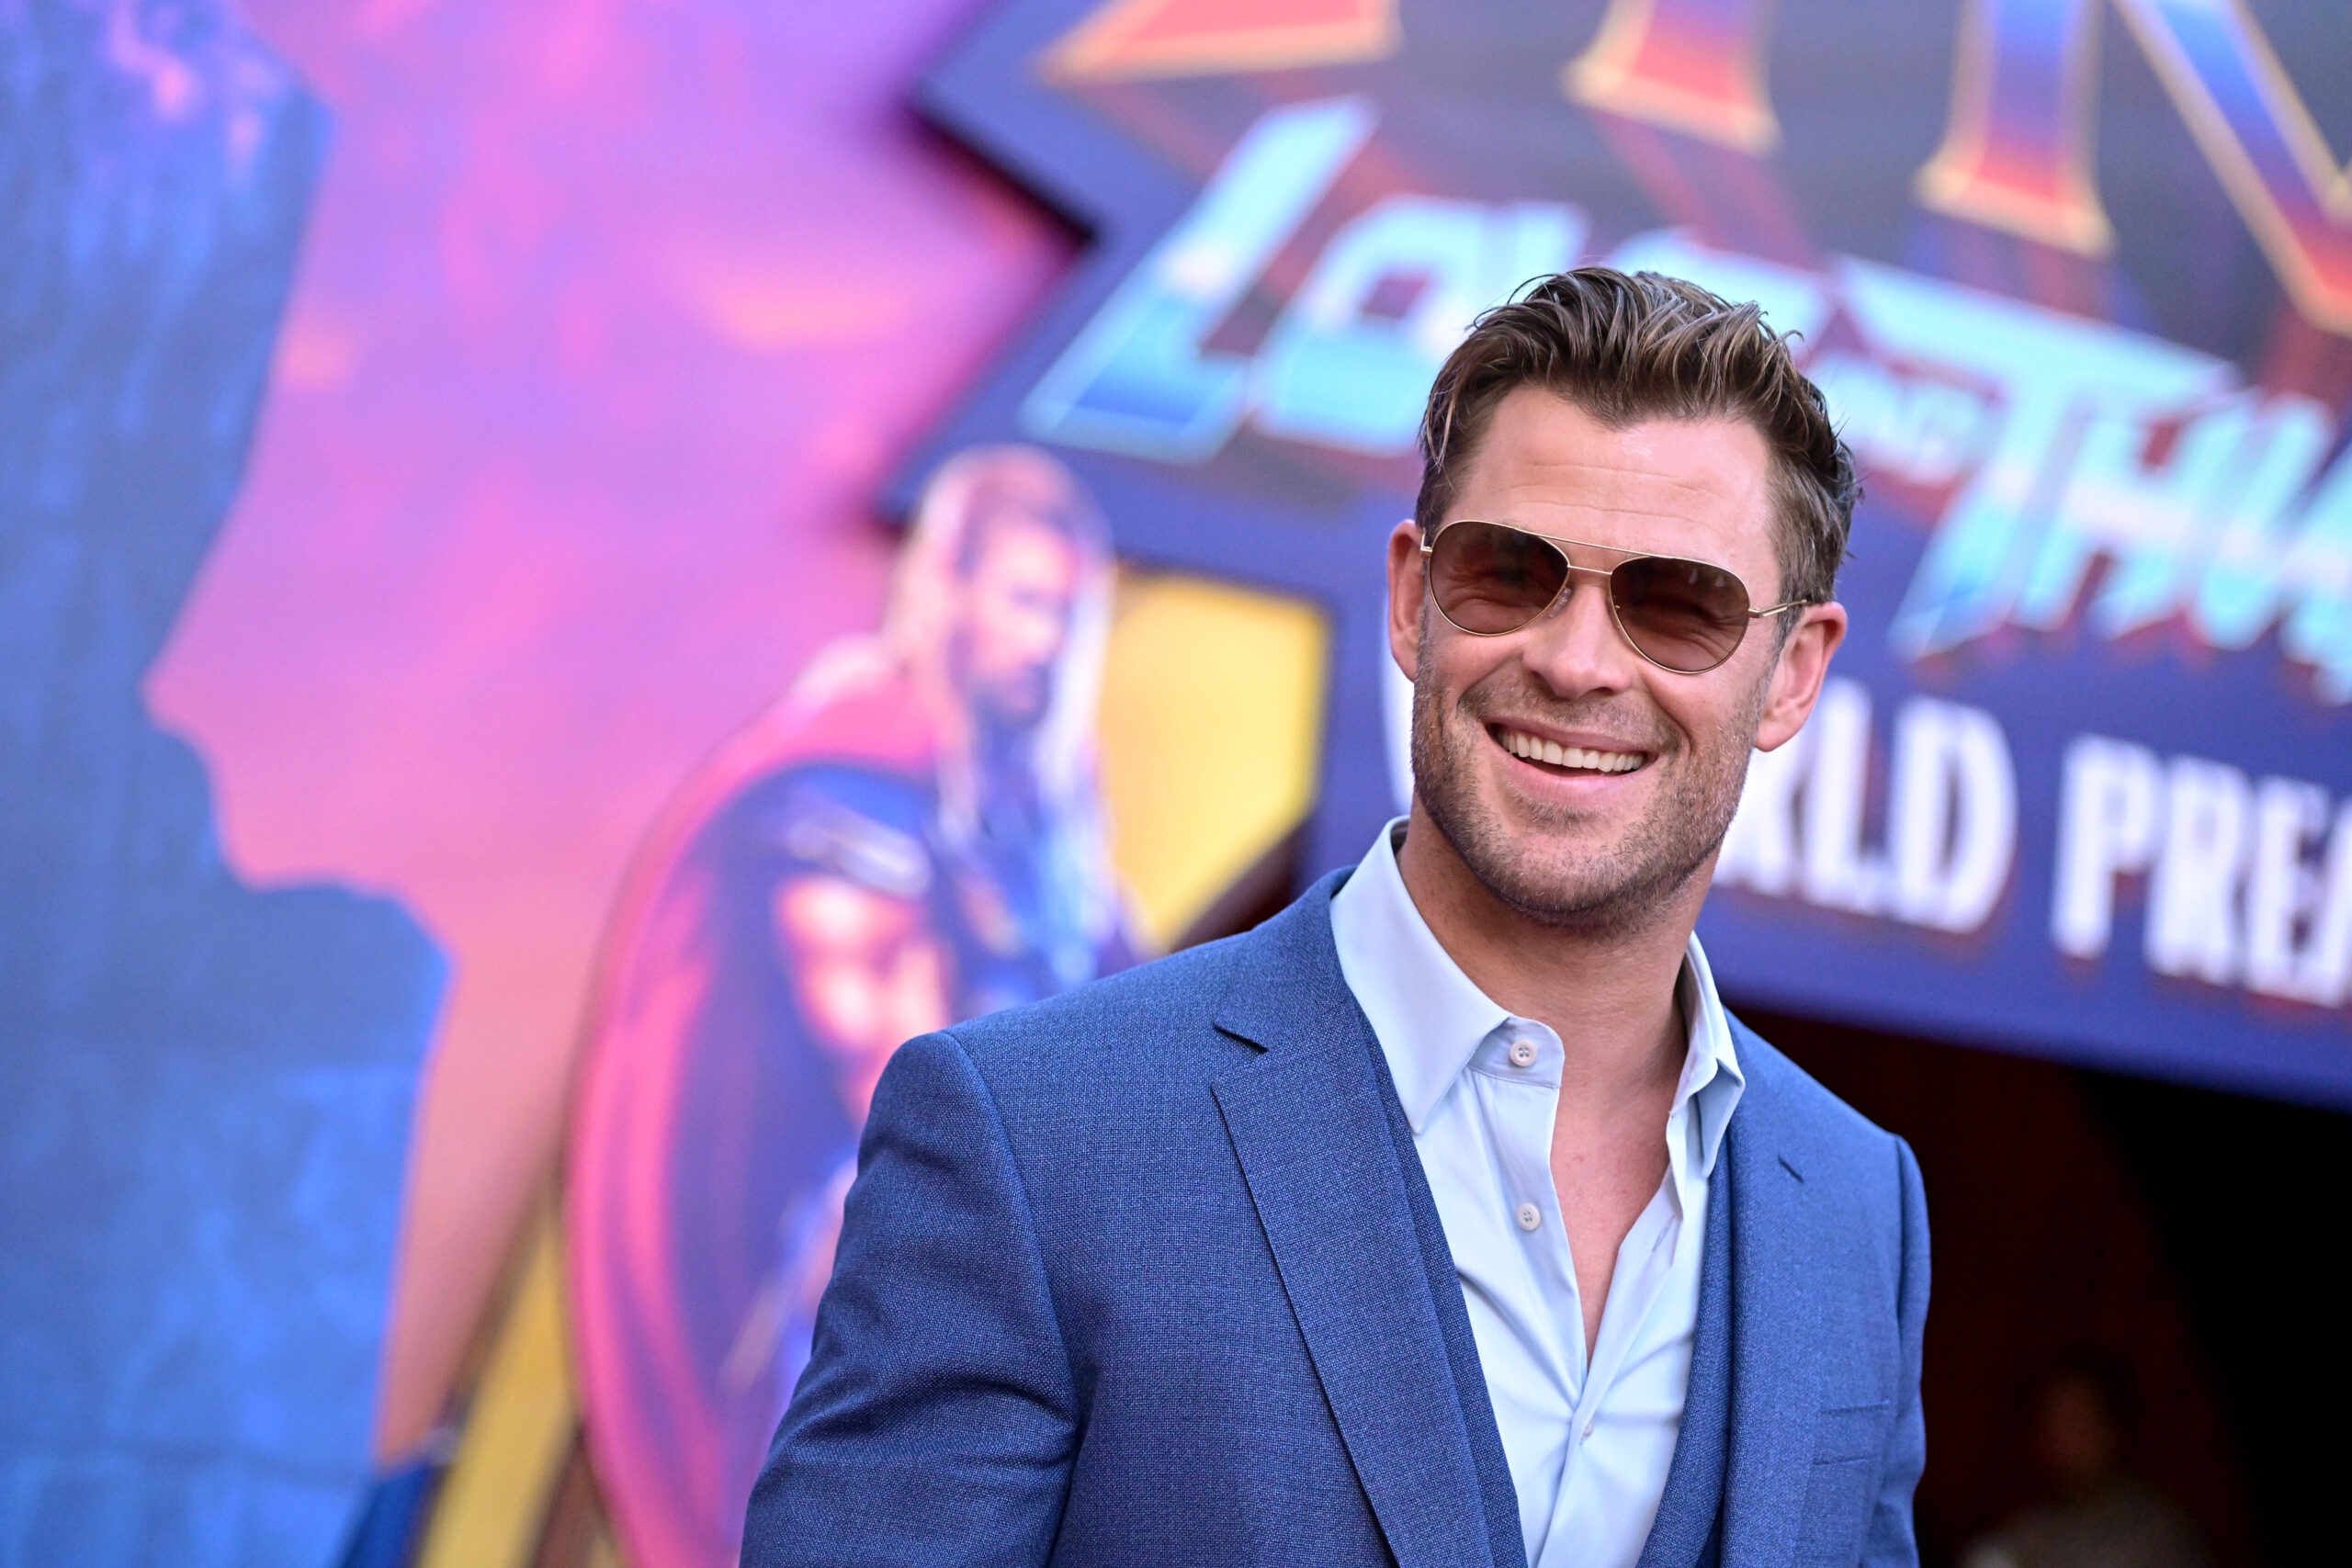 Photograph of Chris Hemsworth as an example of superhero movie fatigue